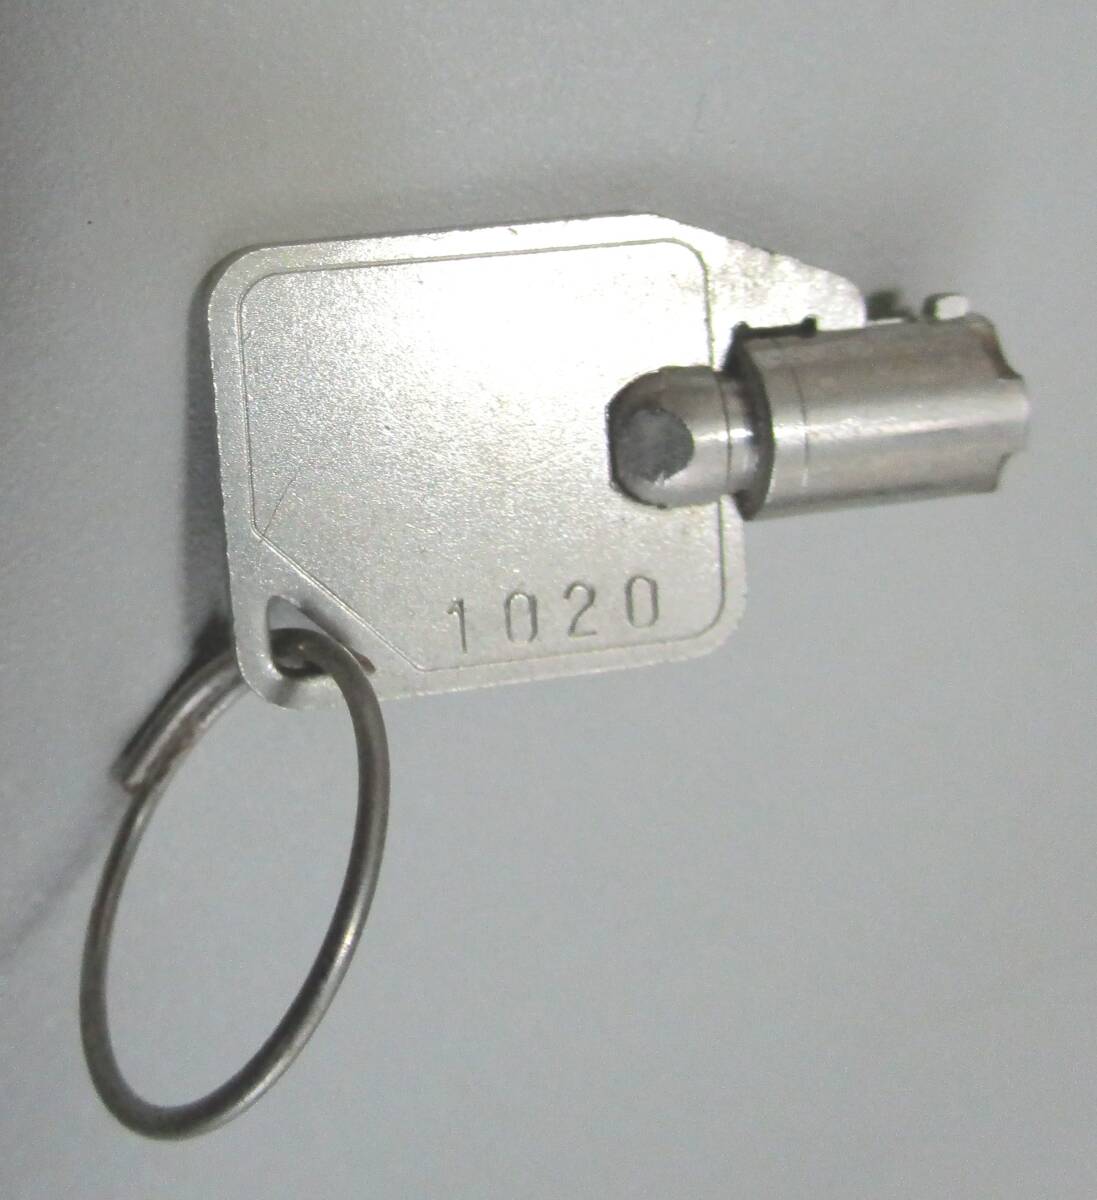  серверный шкаф ключ 1020